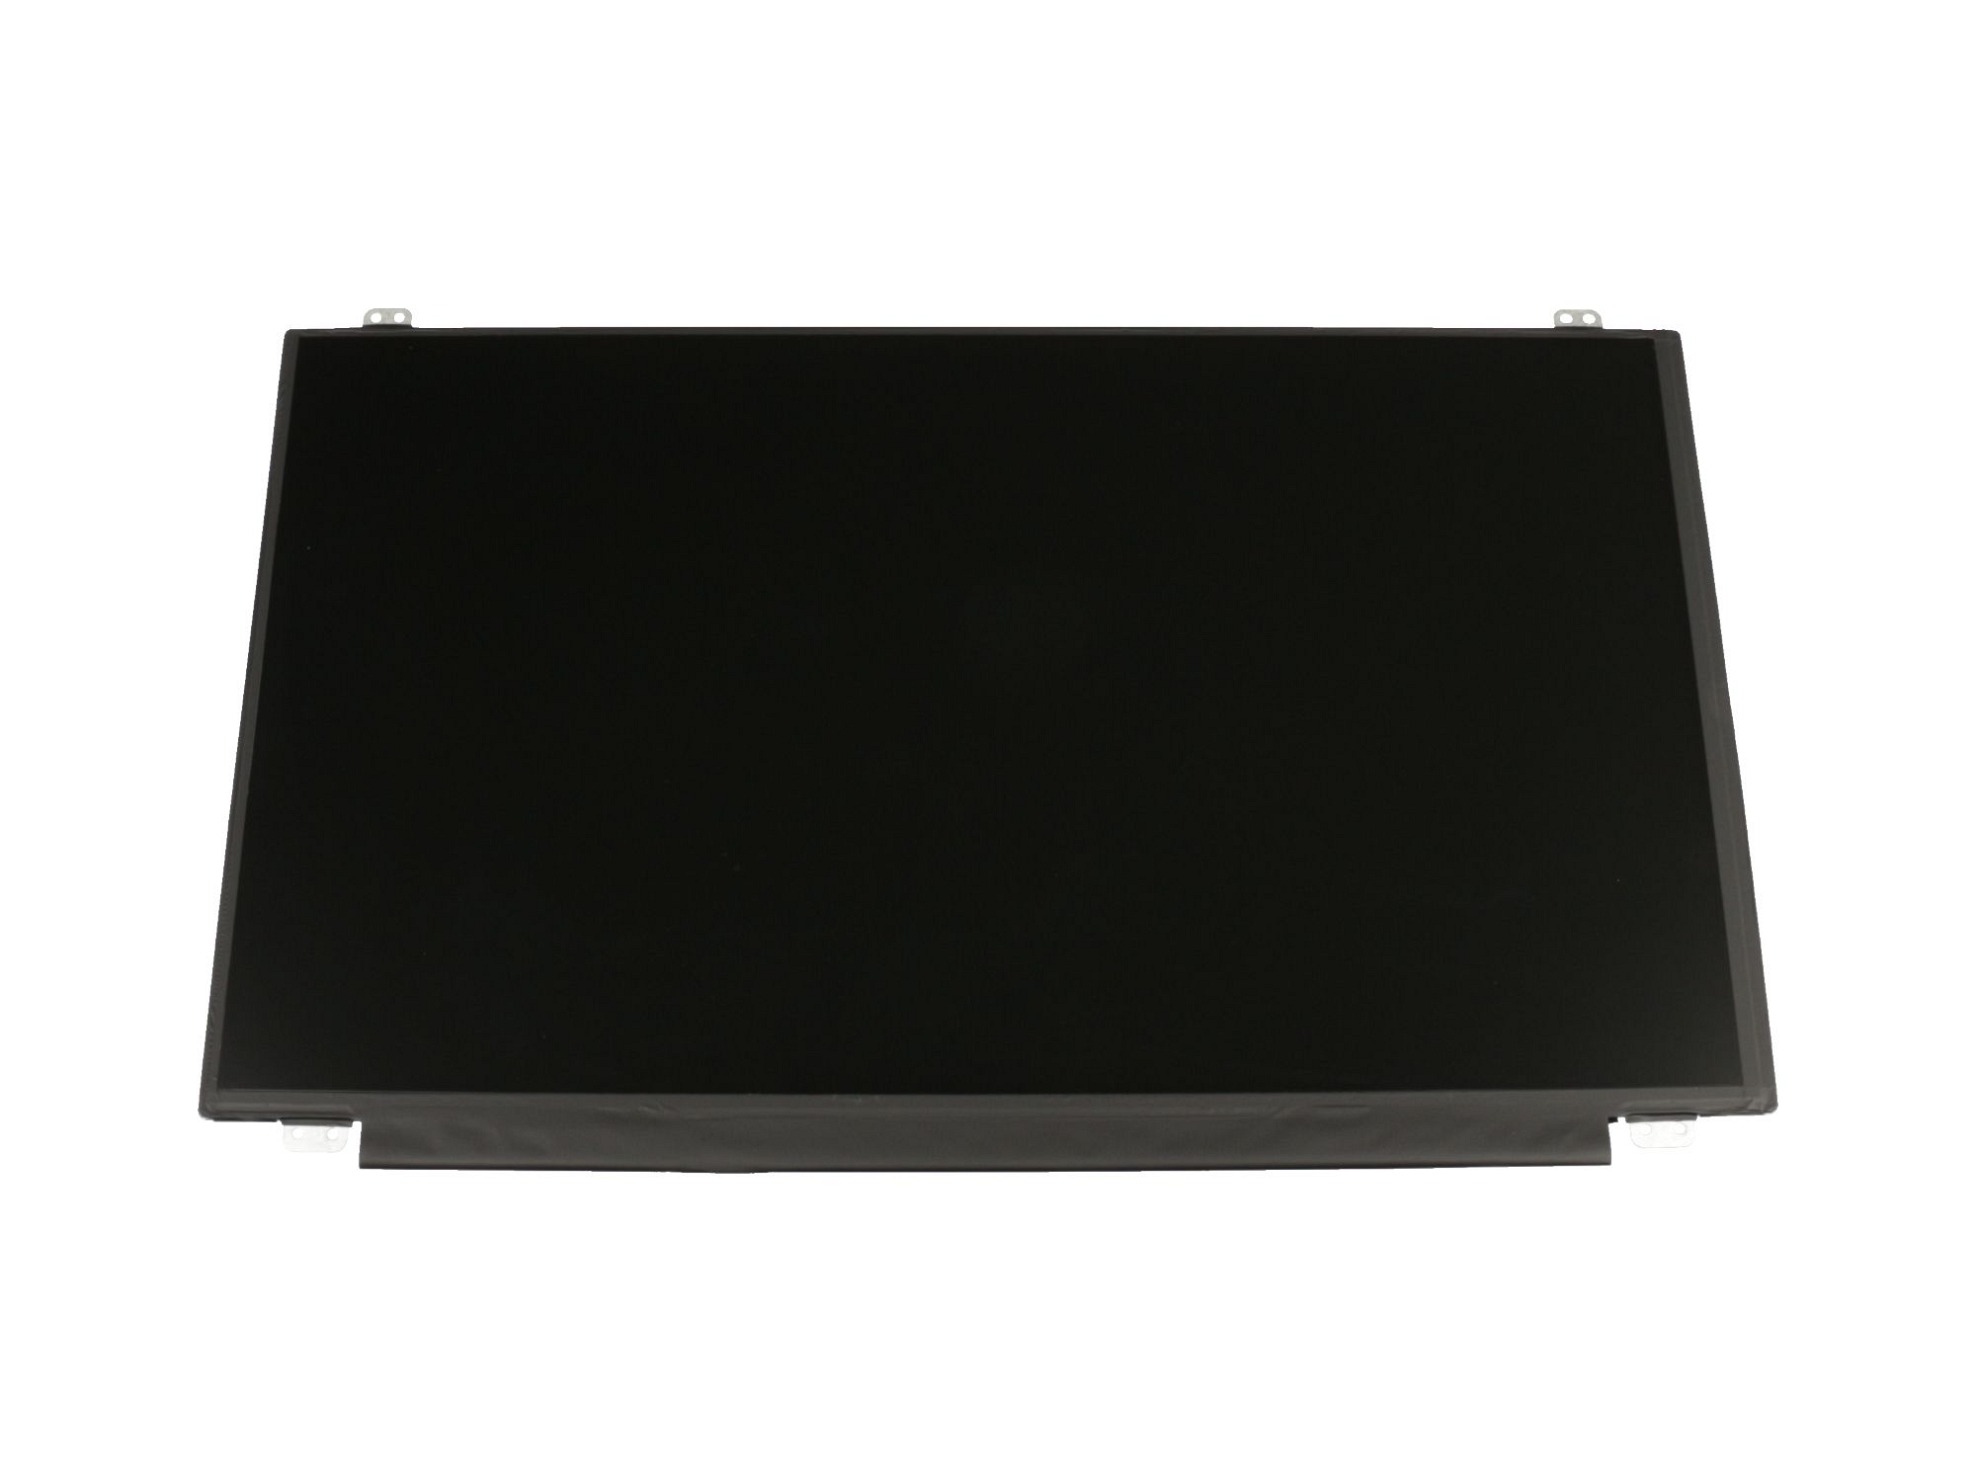 LG LP156WH3-TPSH Display (1366x768) matt slimline